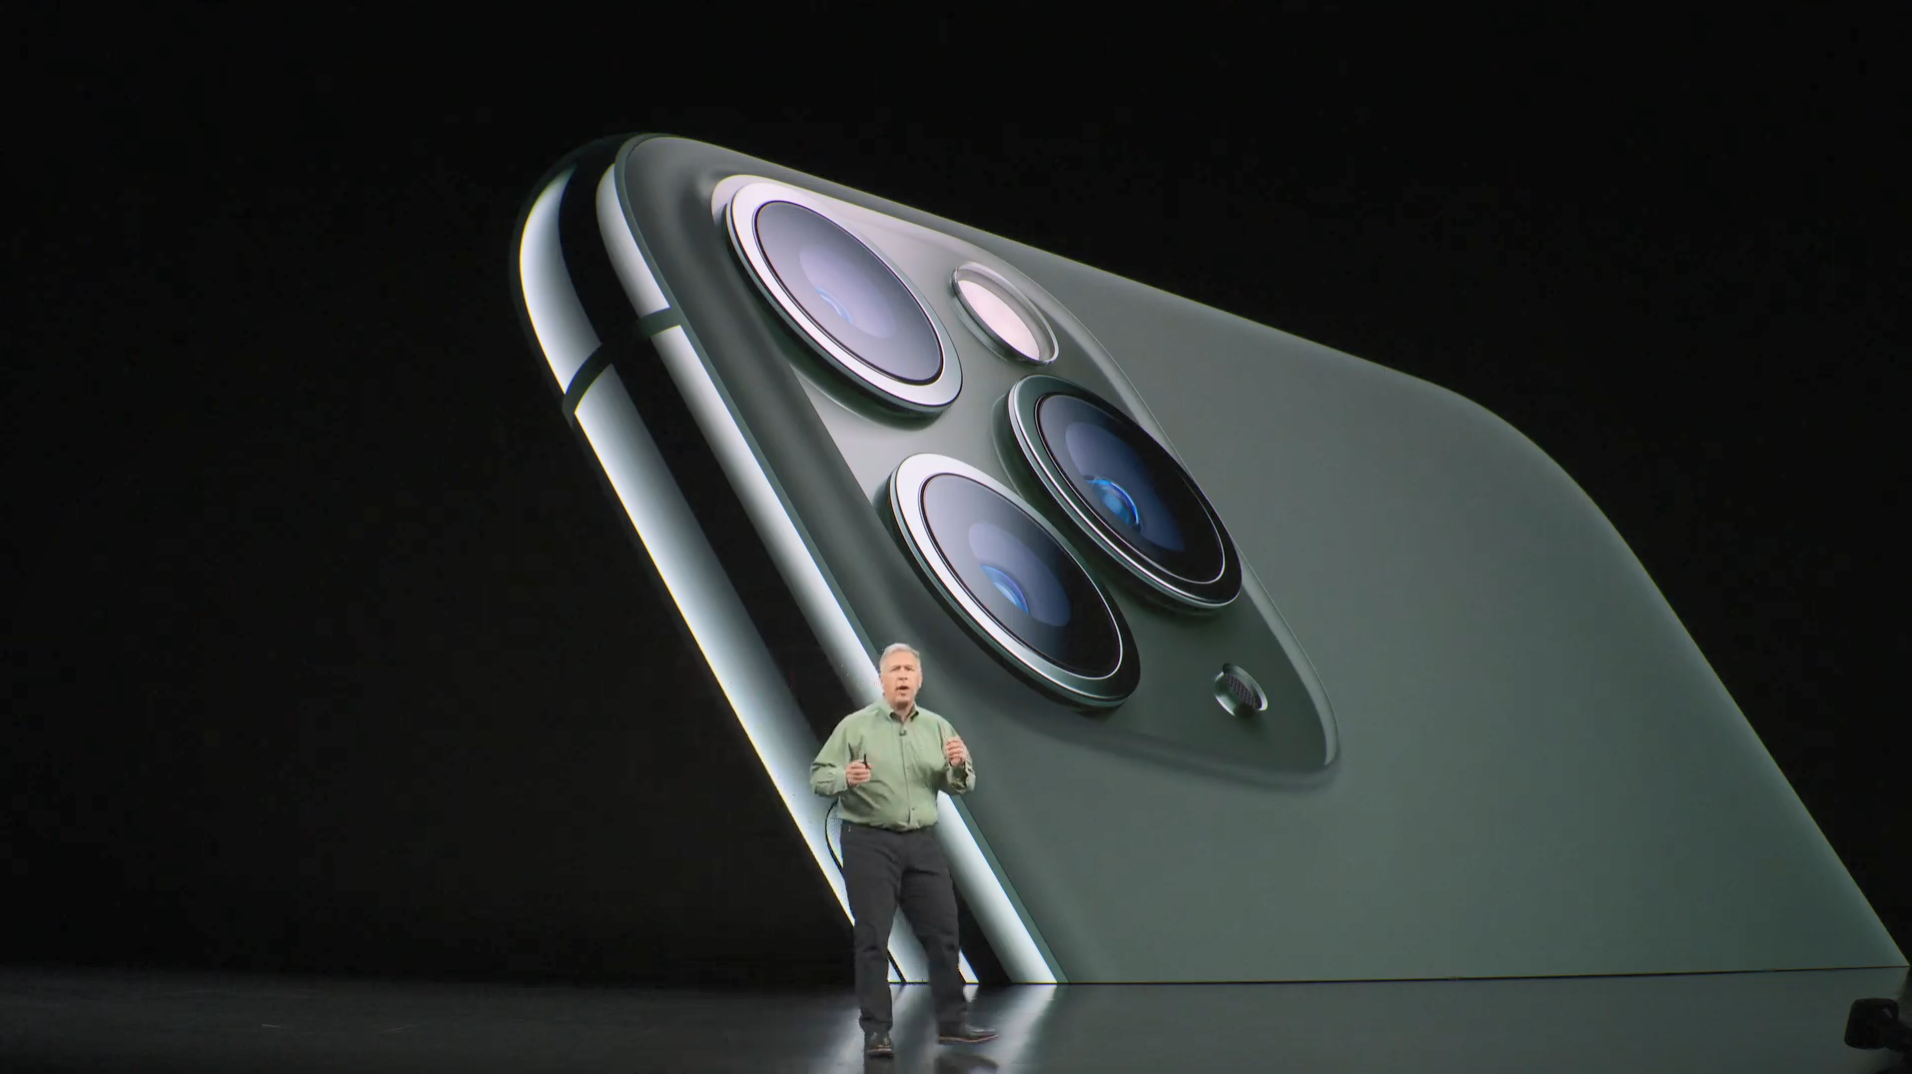   IPhone 11 Pro и 11 Pro Max оснащены громоздкими камерами с тремя объективами